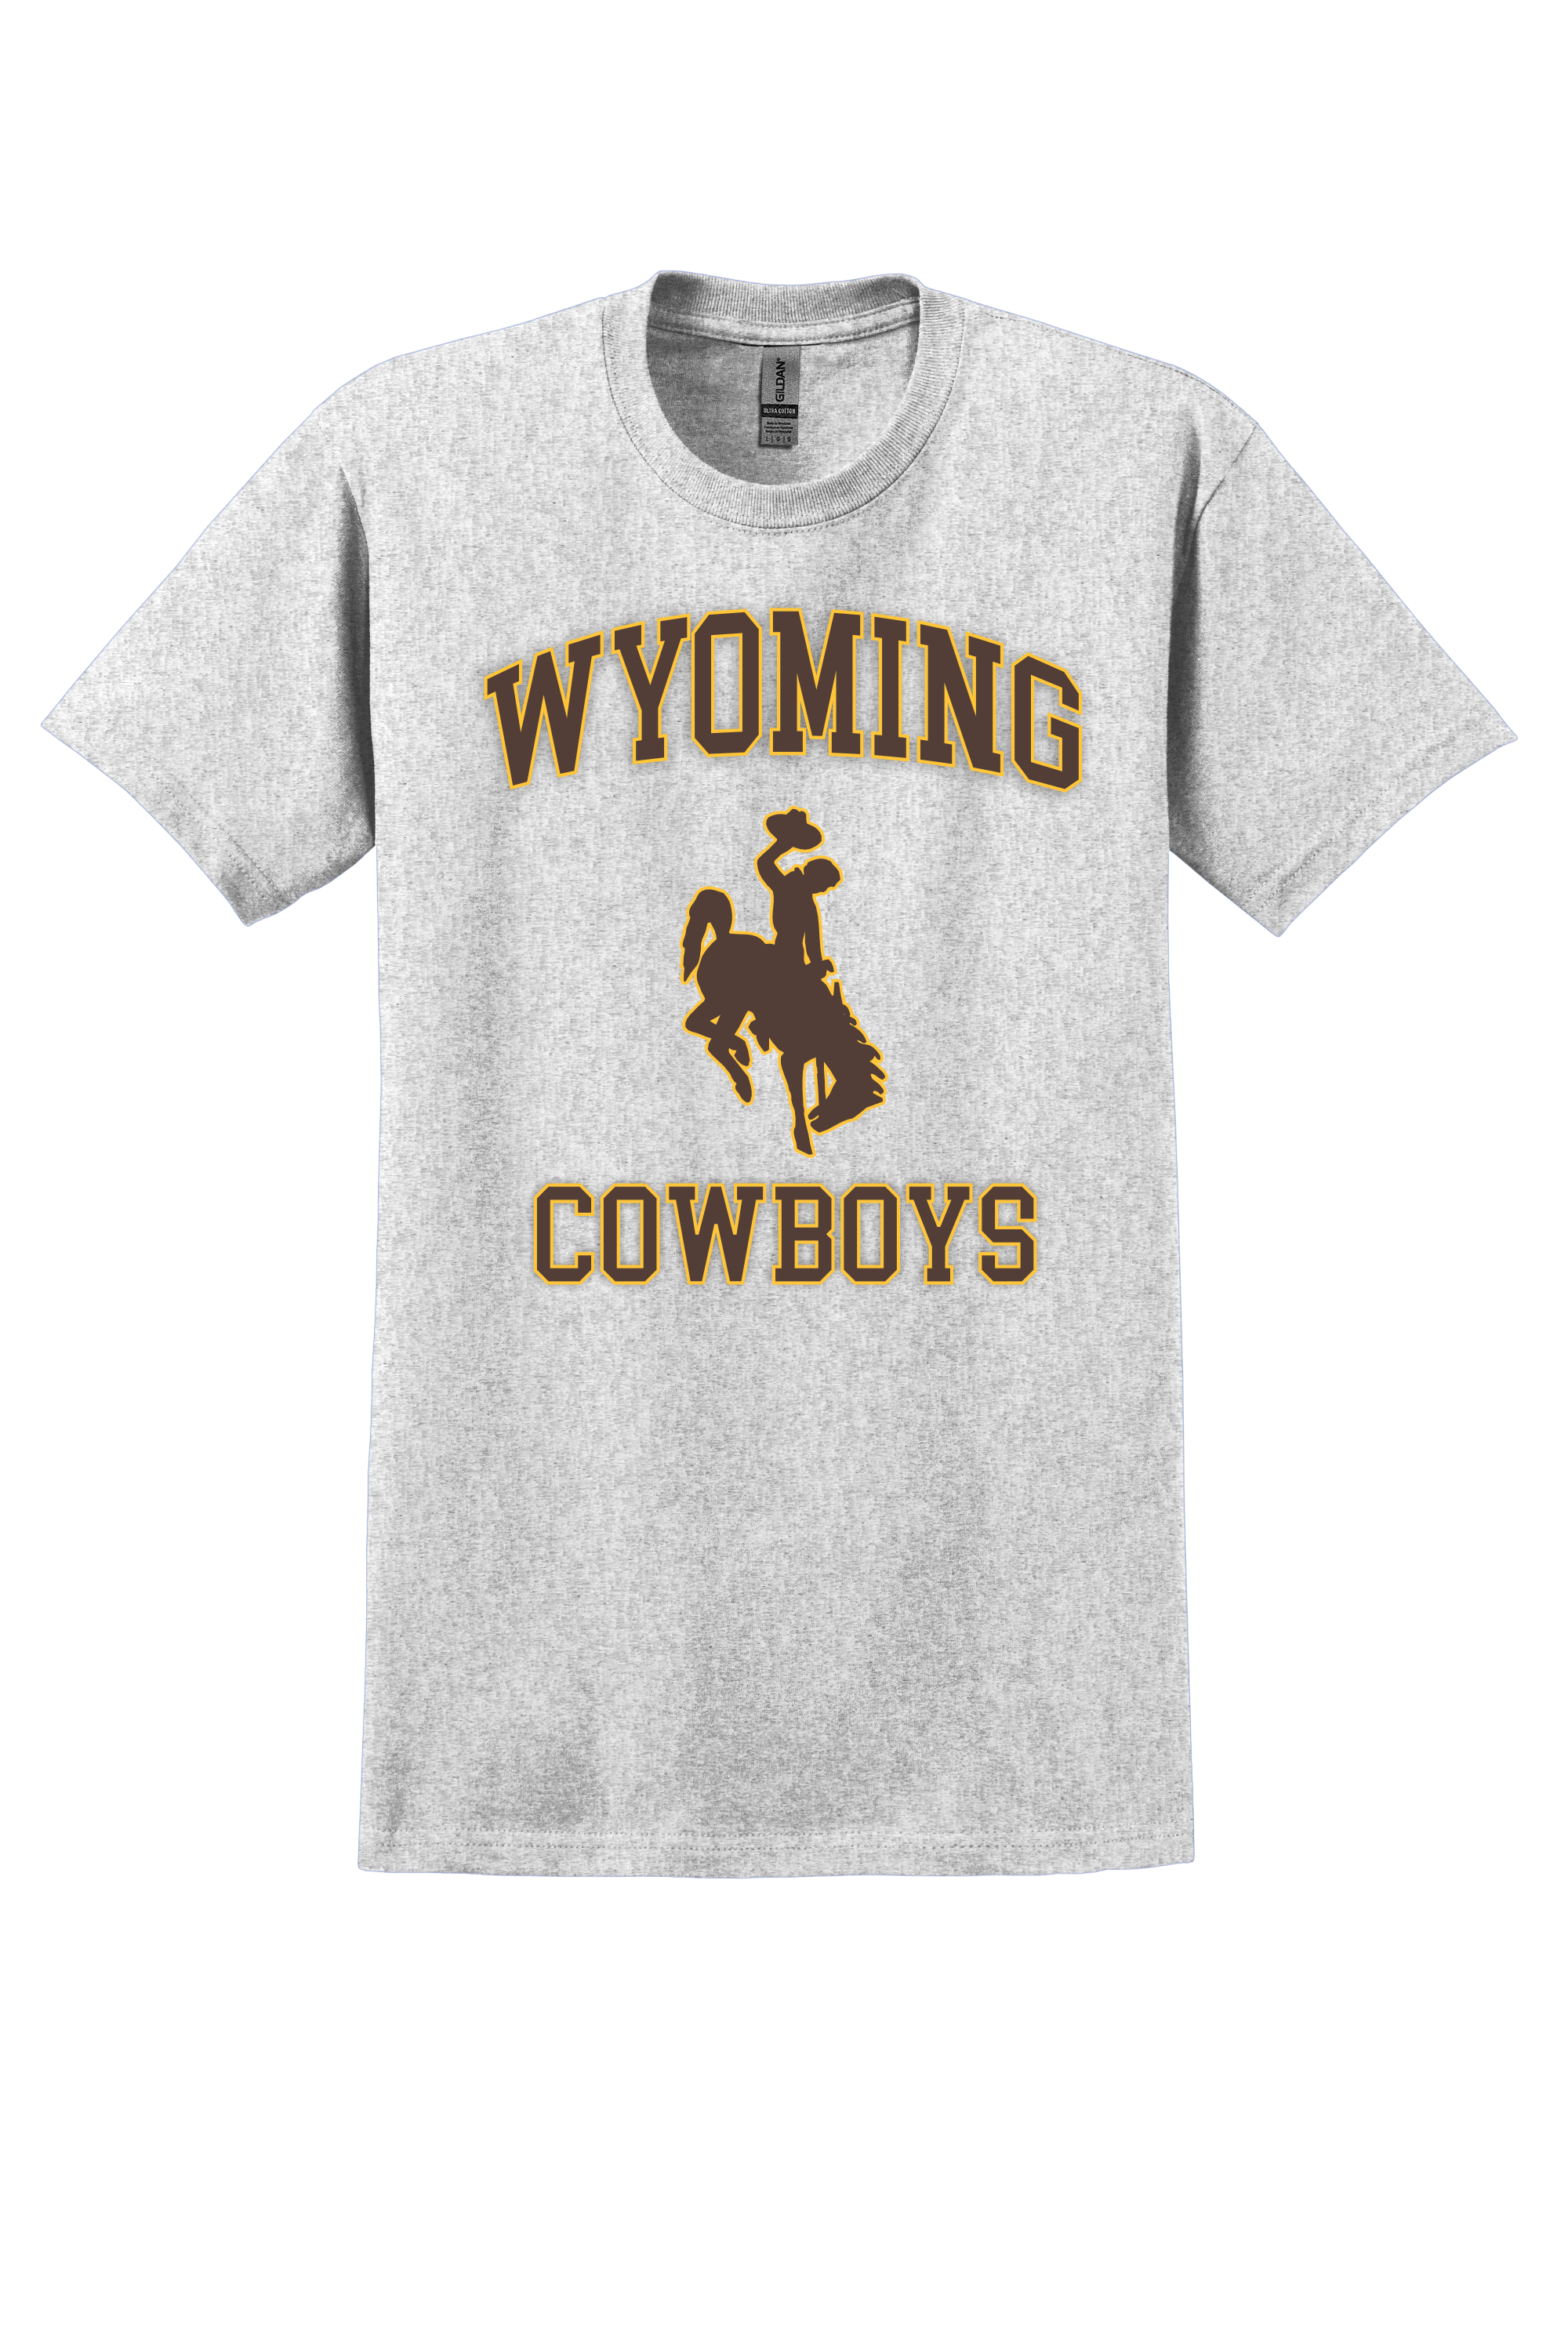 Wyoming Cowboys T-Shirt Large / Heathered Gray